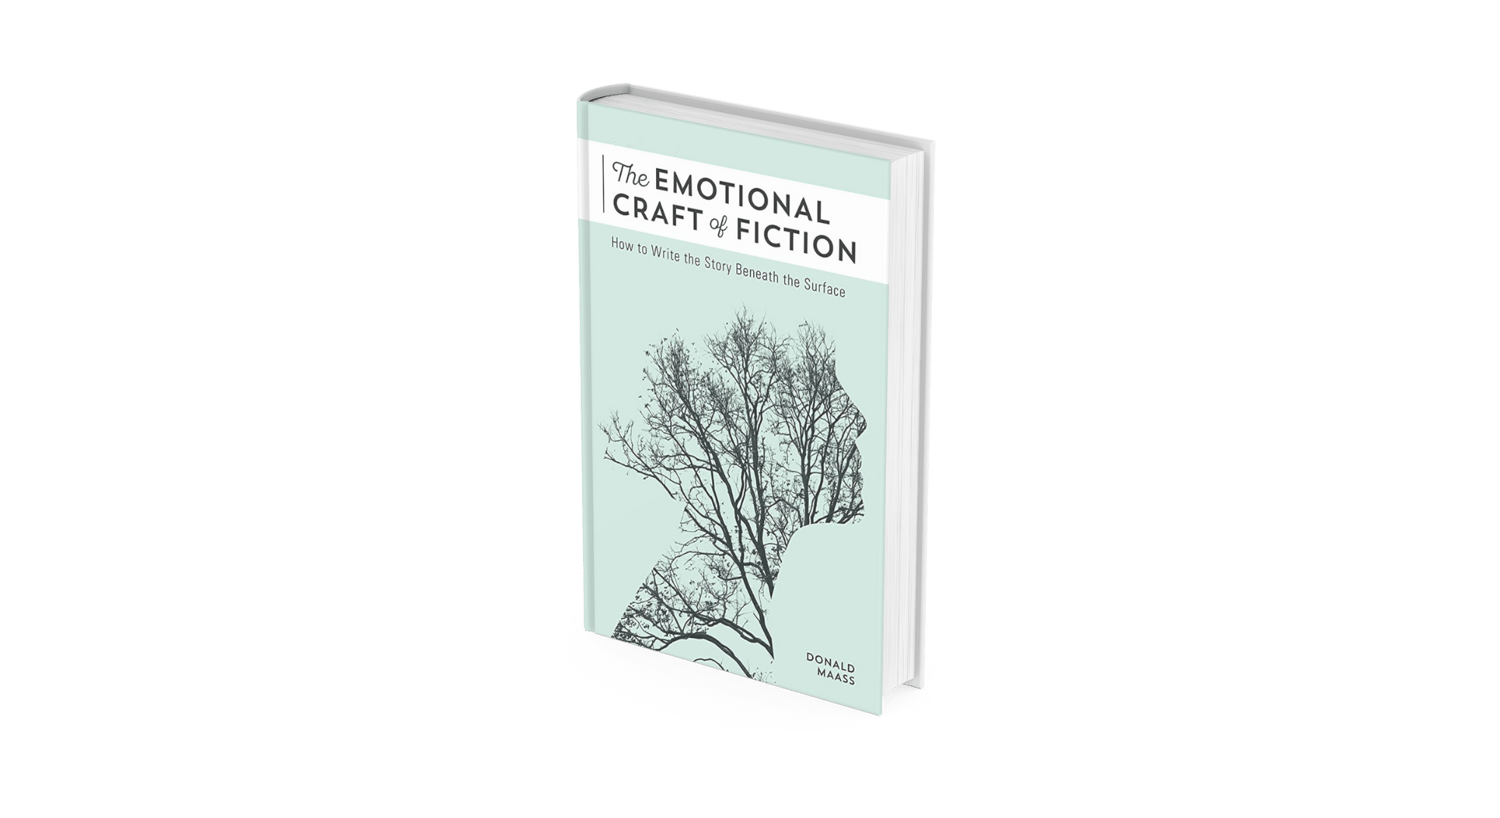 The Emotional Craft of Fiction, Donald Maass